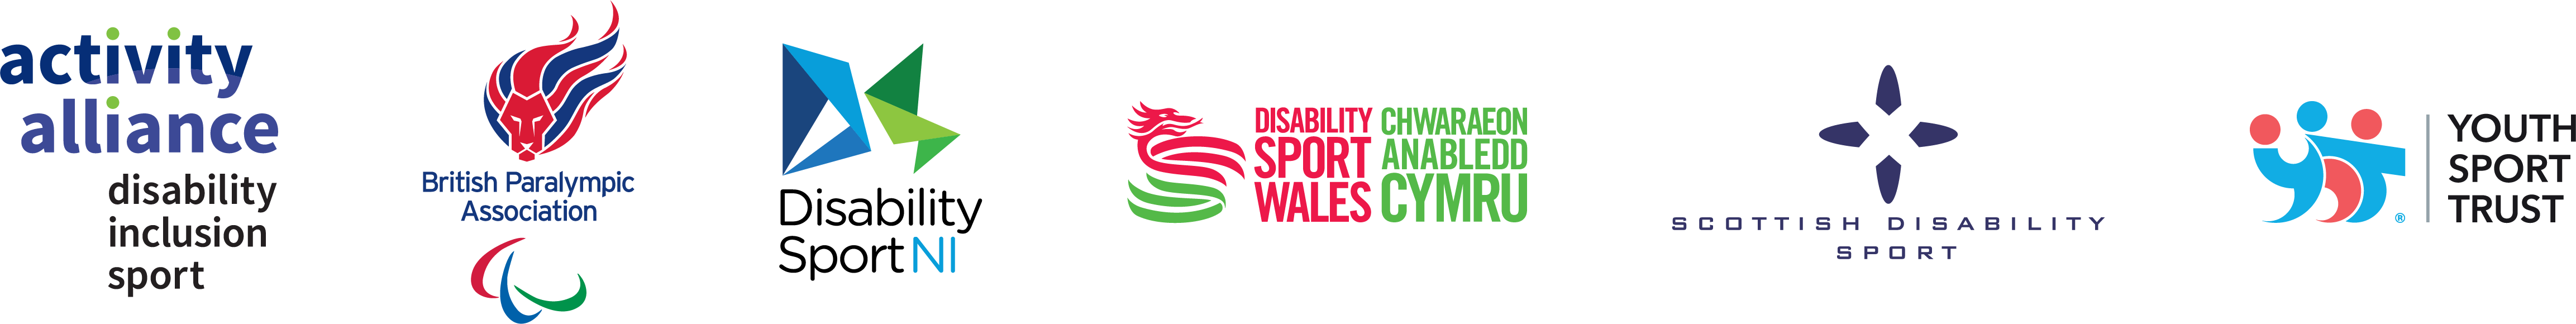 Logos of Activity Alliance, British Paralympic Association, Disability Sport Northern Ireland, Disability Sport Wales, Chwaraeon Anabledo Cymru, Scottish Disability Sport and the Youth Sport Trust